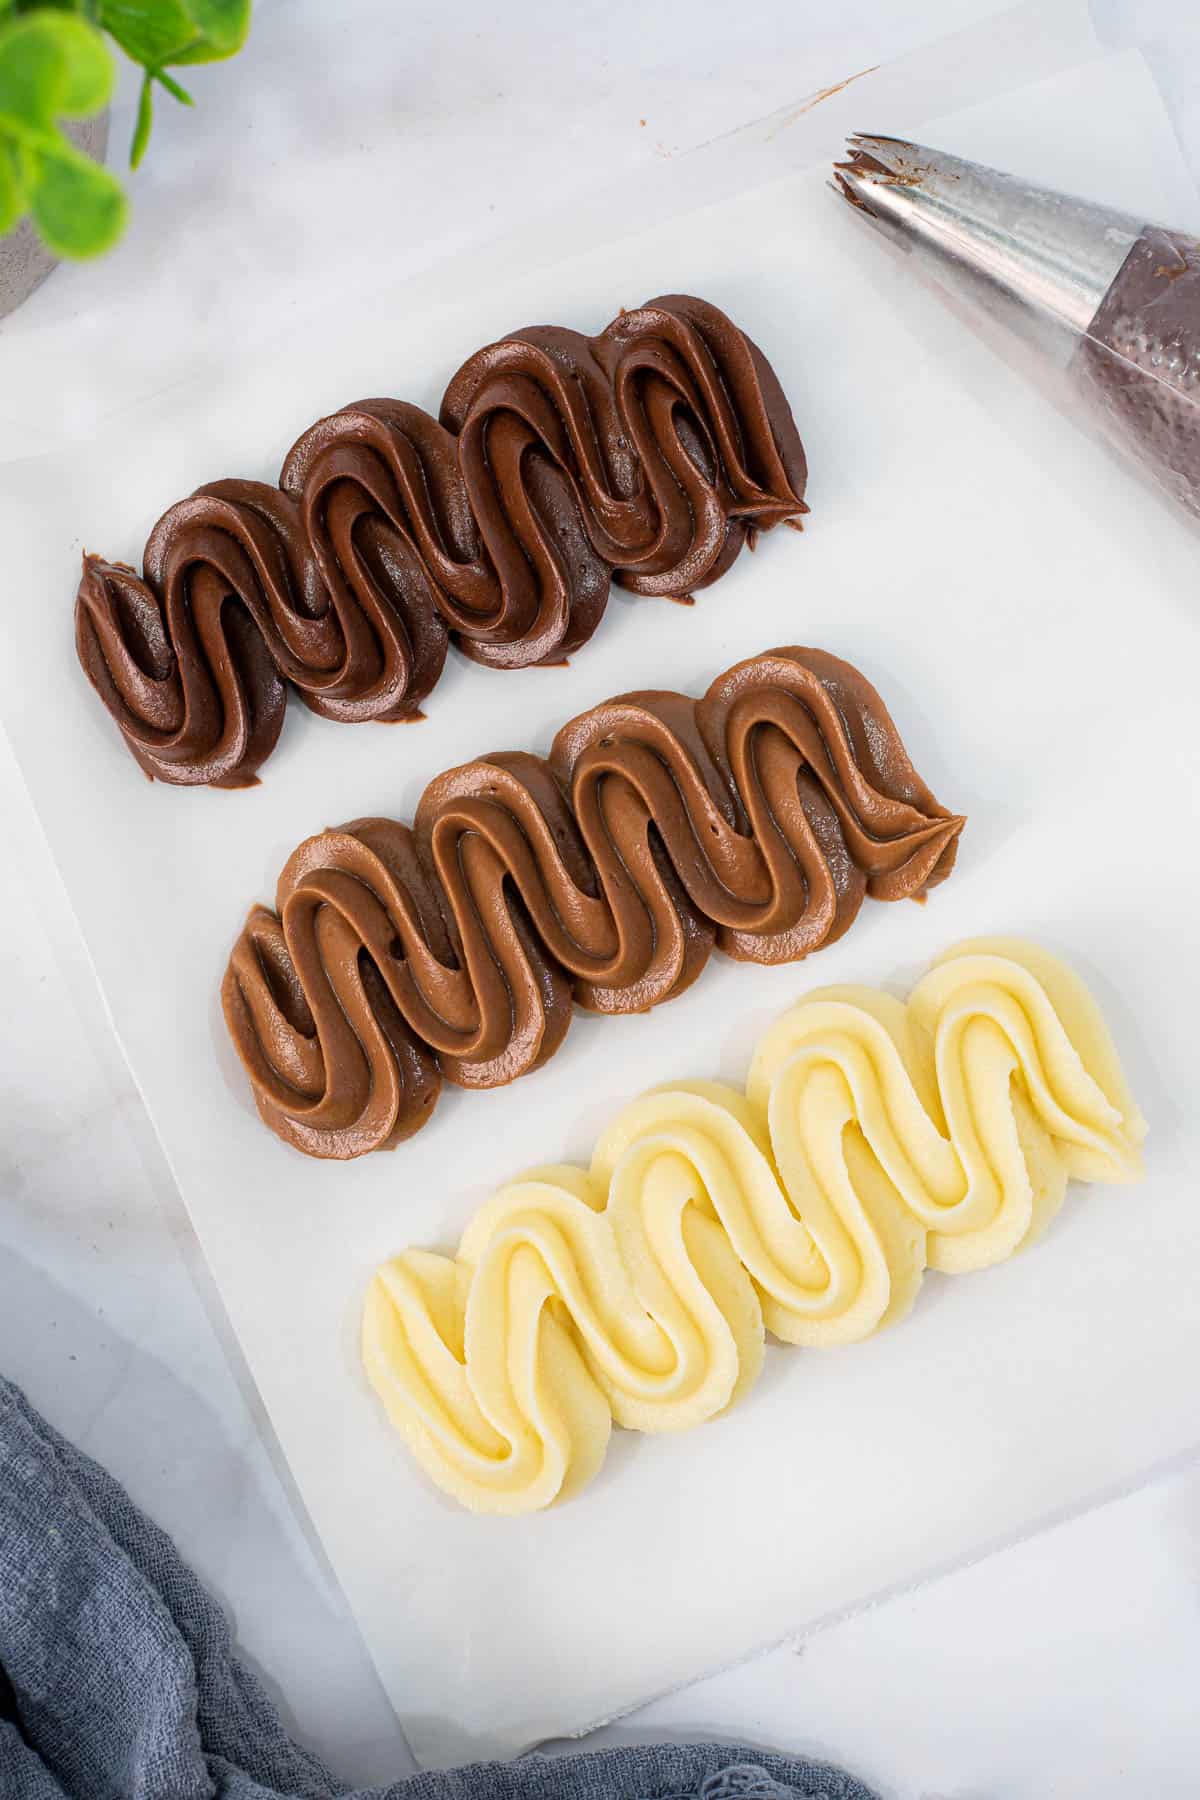 Three rows of zig zag piped ganache icing in dark chocolate, milk chocolate and white chocolate.